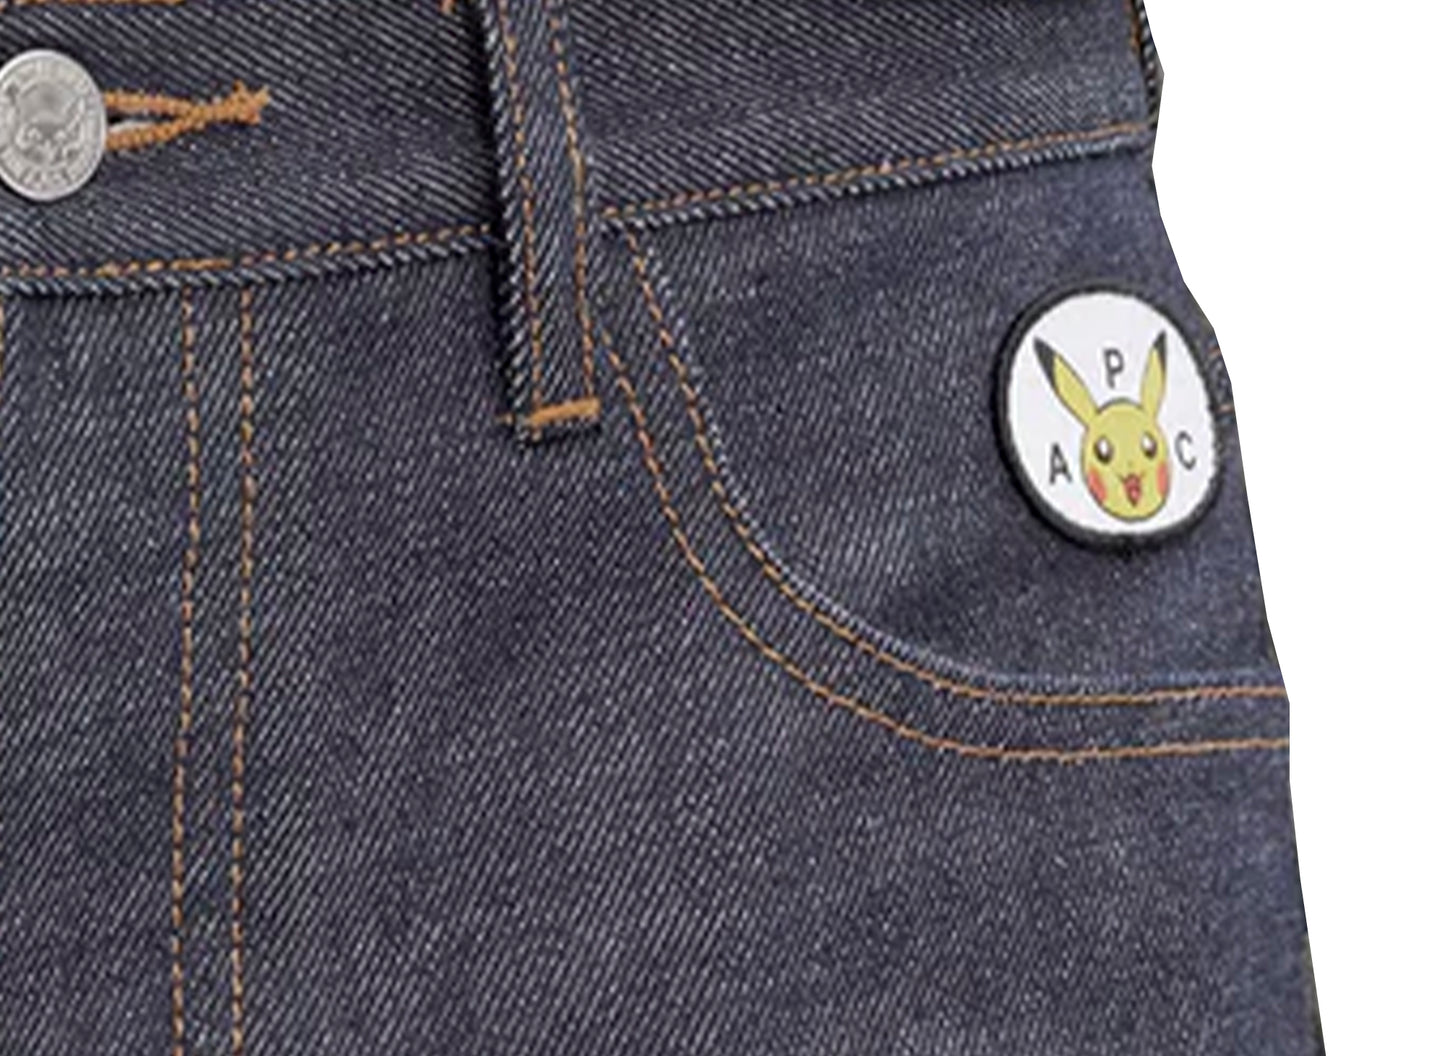 A.P.C. x Pokemon New Standard Jeans in Indigo